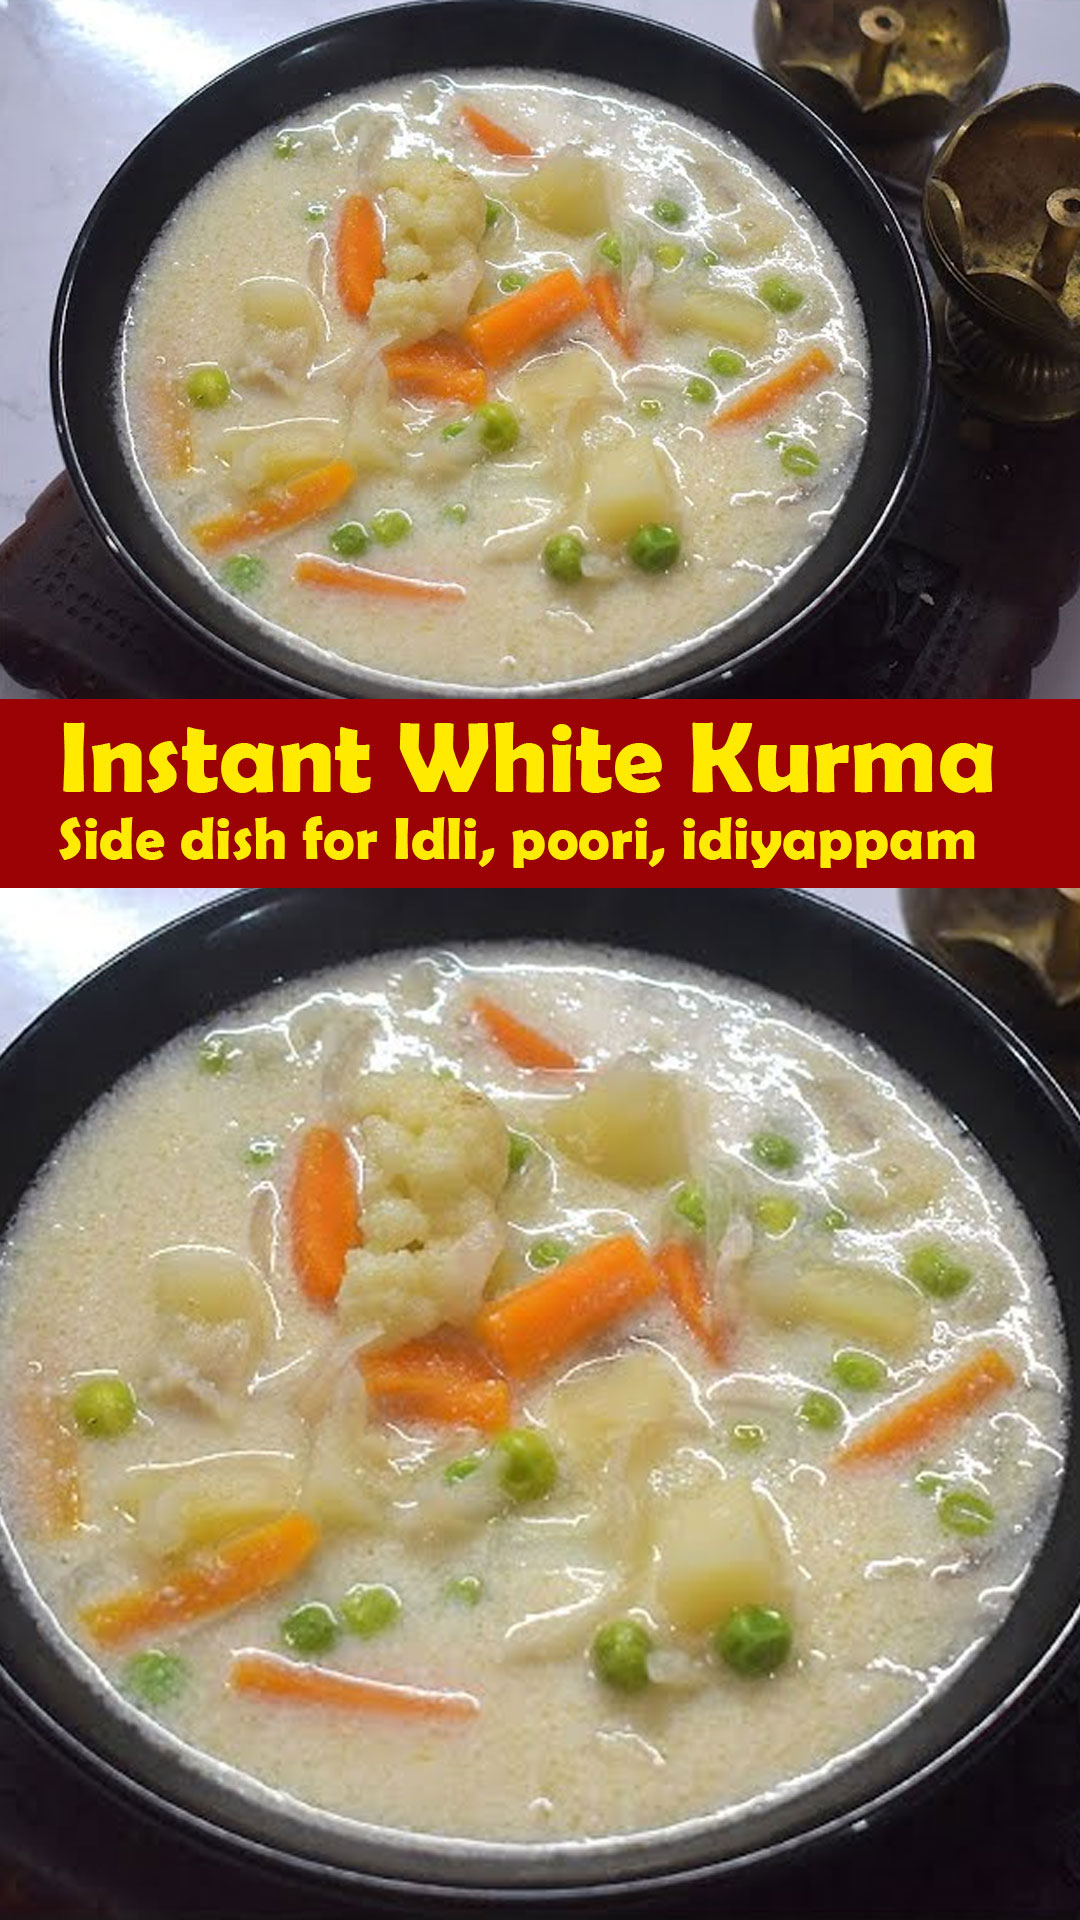 Instant white kurma